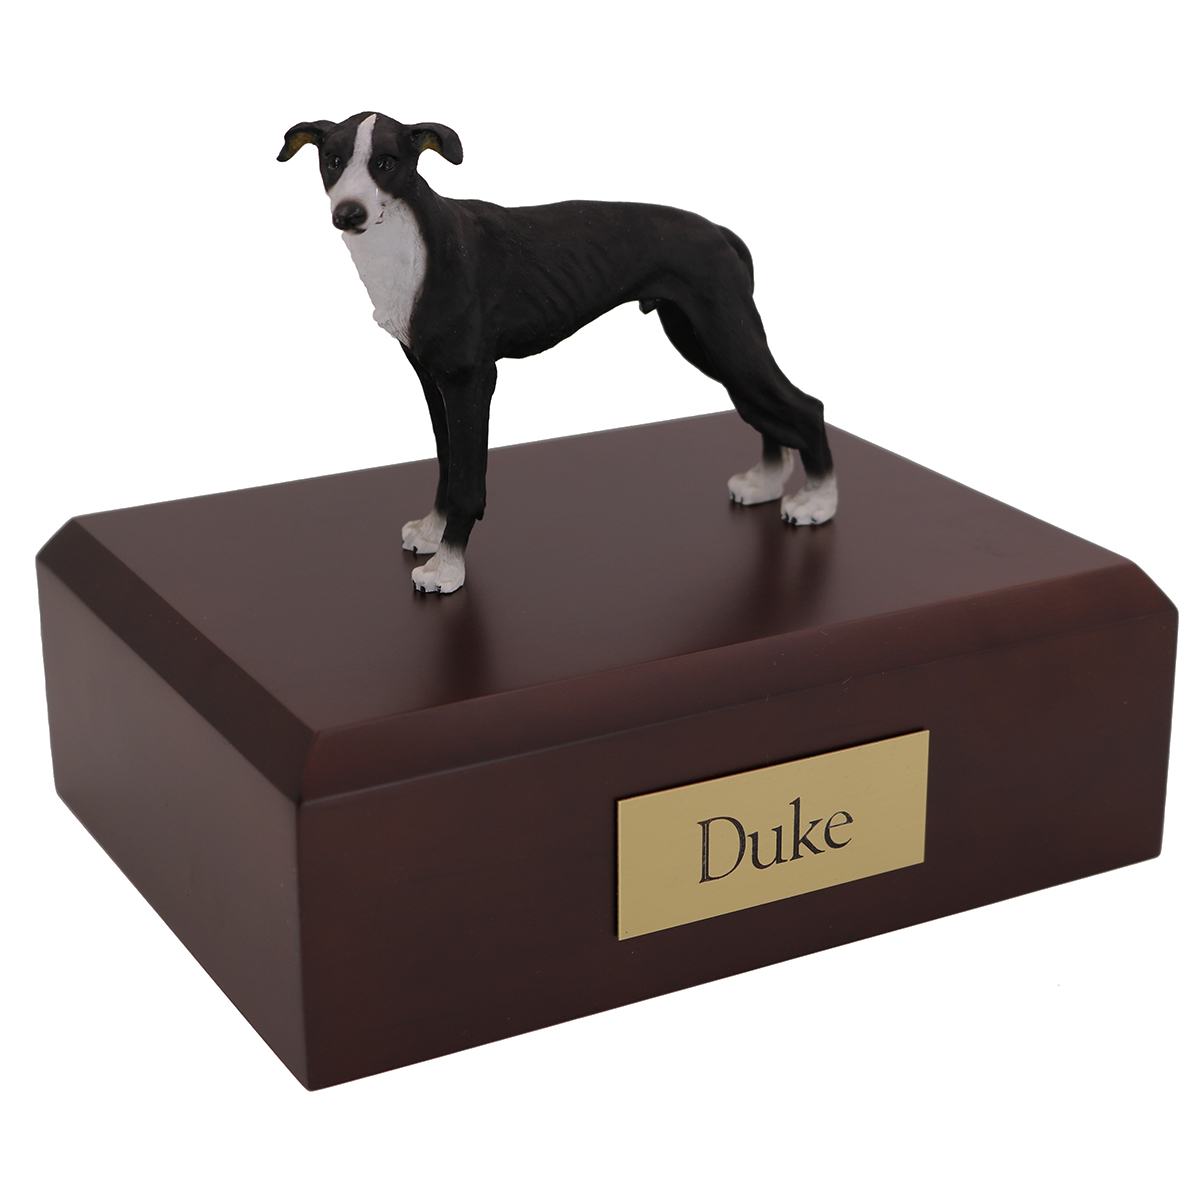 Dog, Greyhound, Black - Figurine Urn